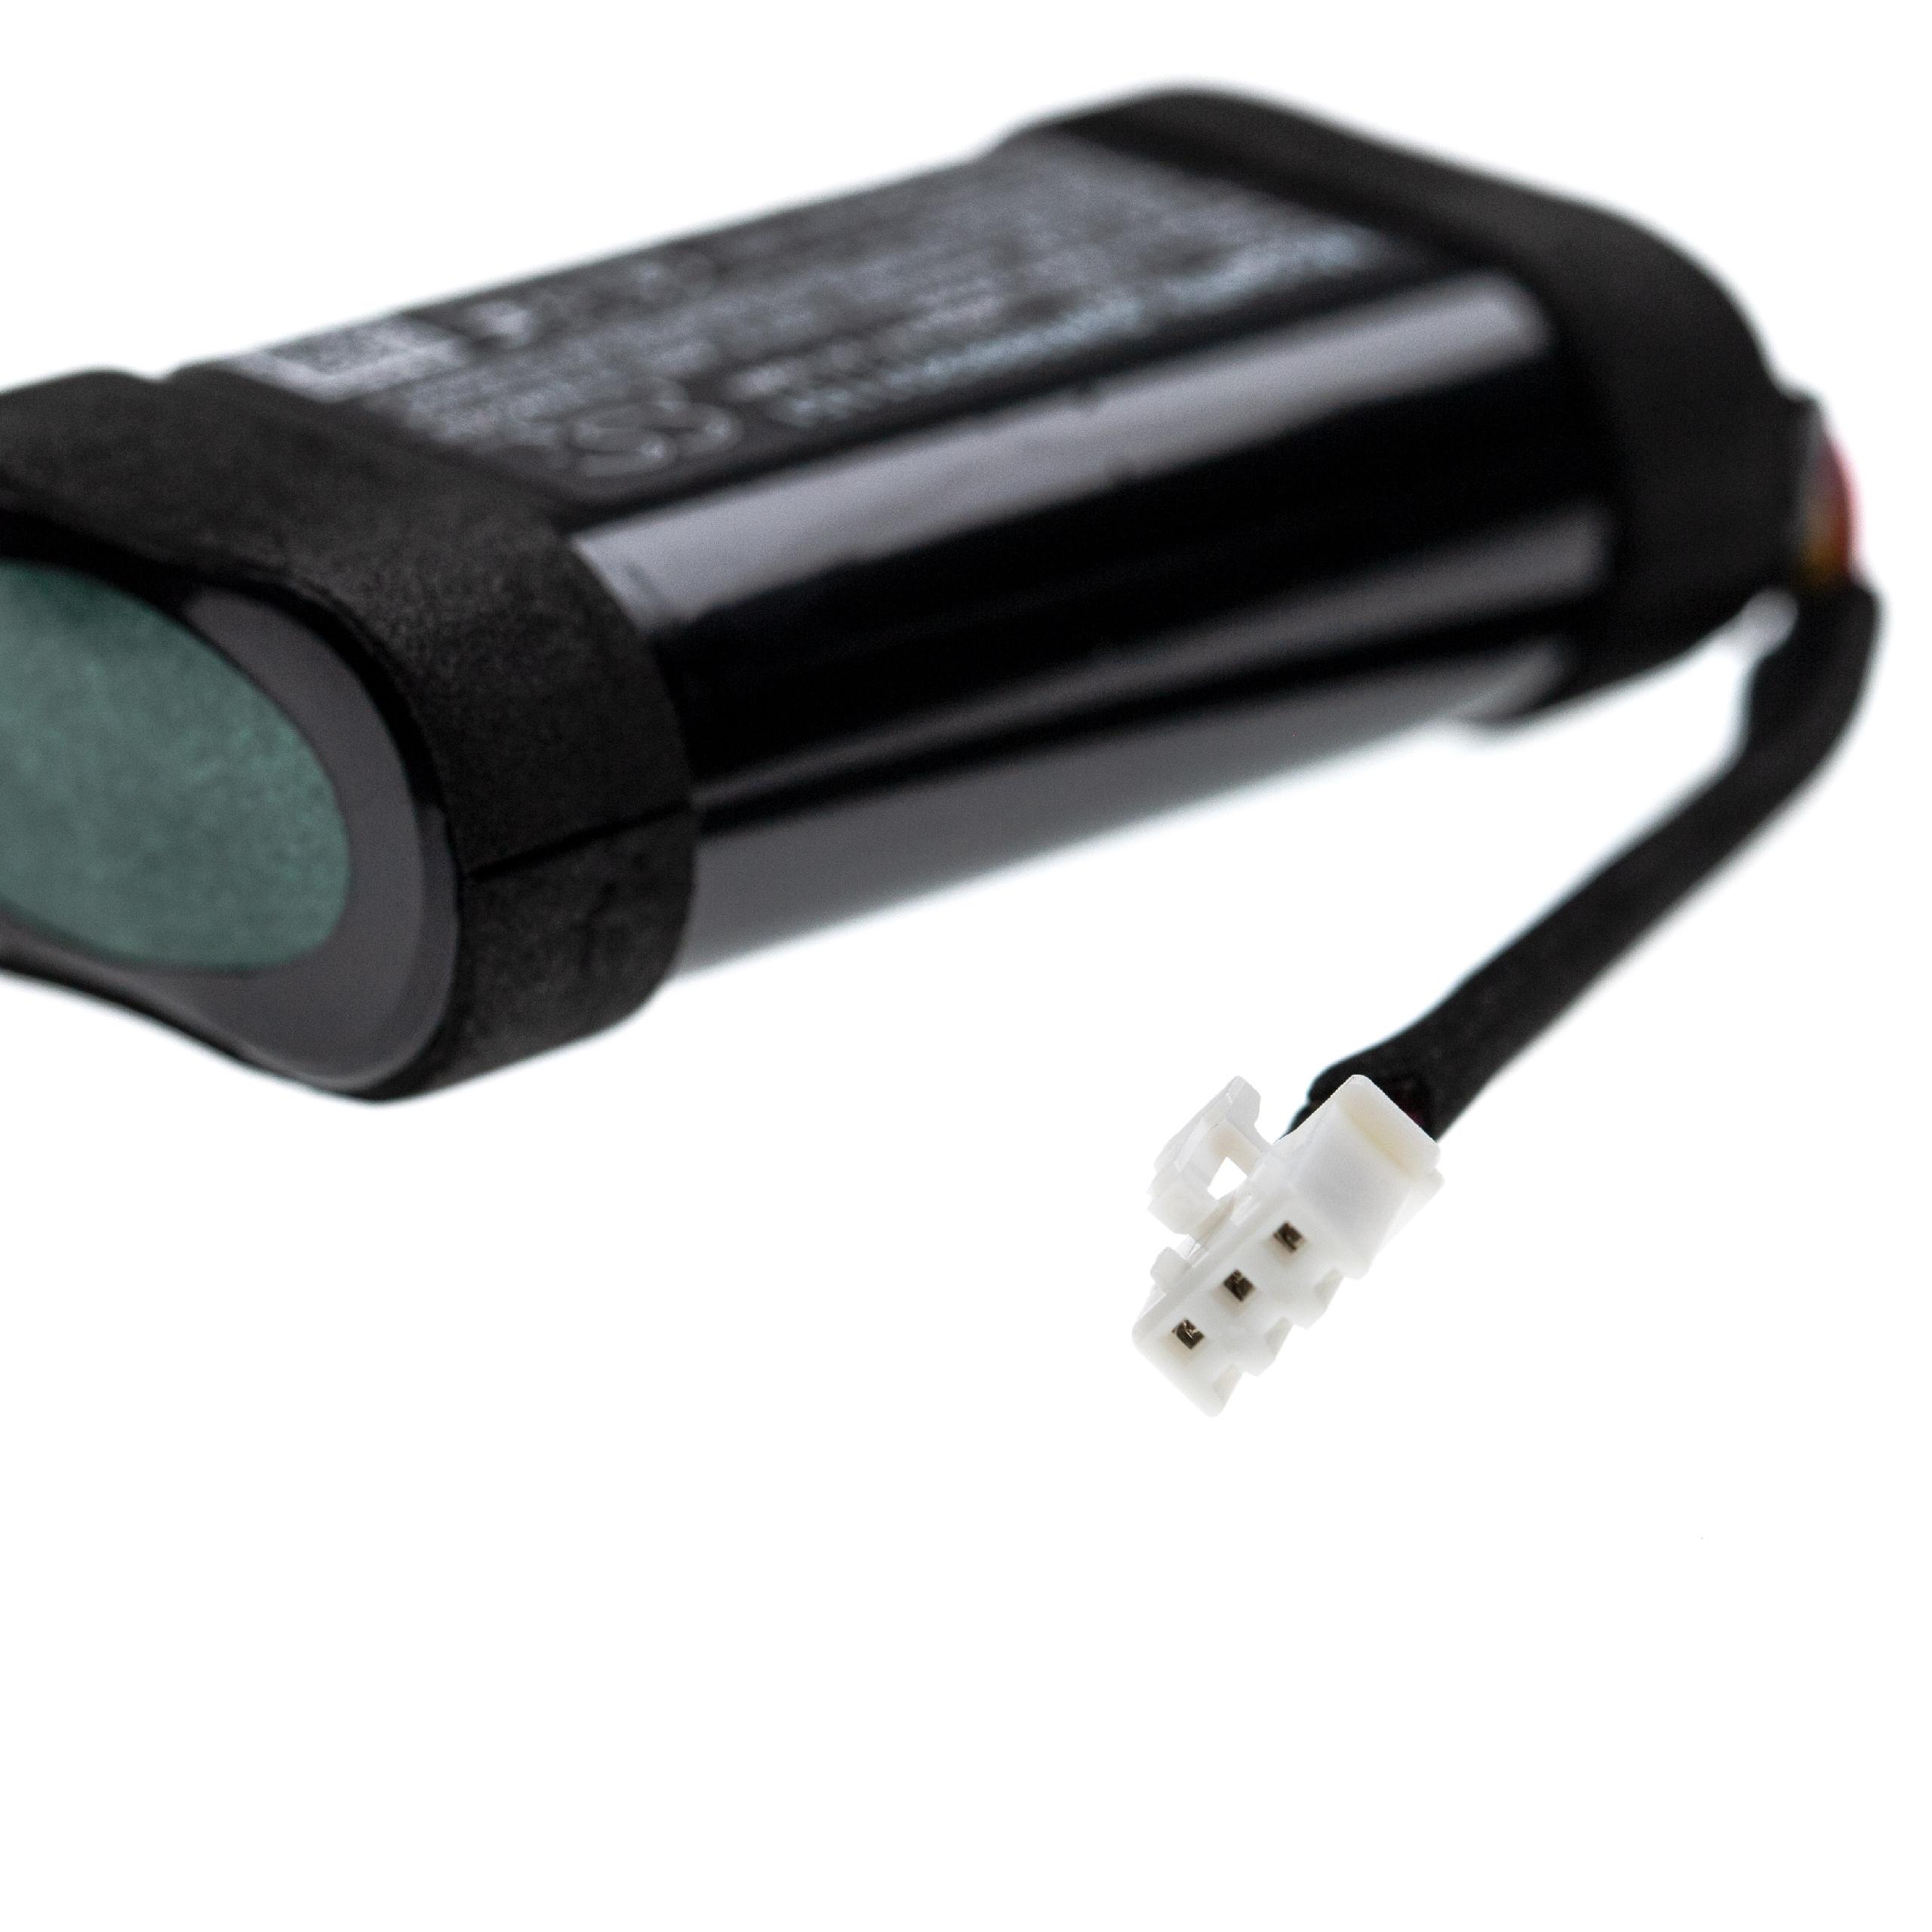 Batterie remplace Bang & Olufsen C129D3 pour enceinte Bang & Olufsen - 3400mAh 7,4V Li-ion